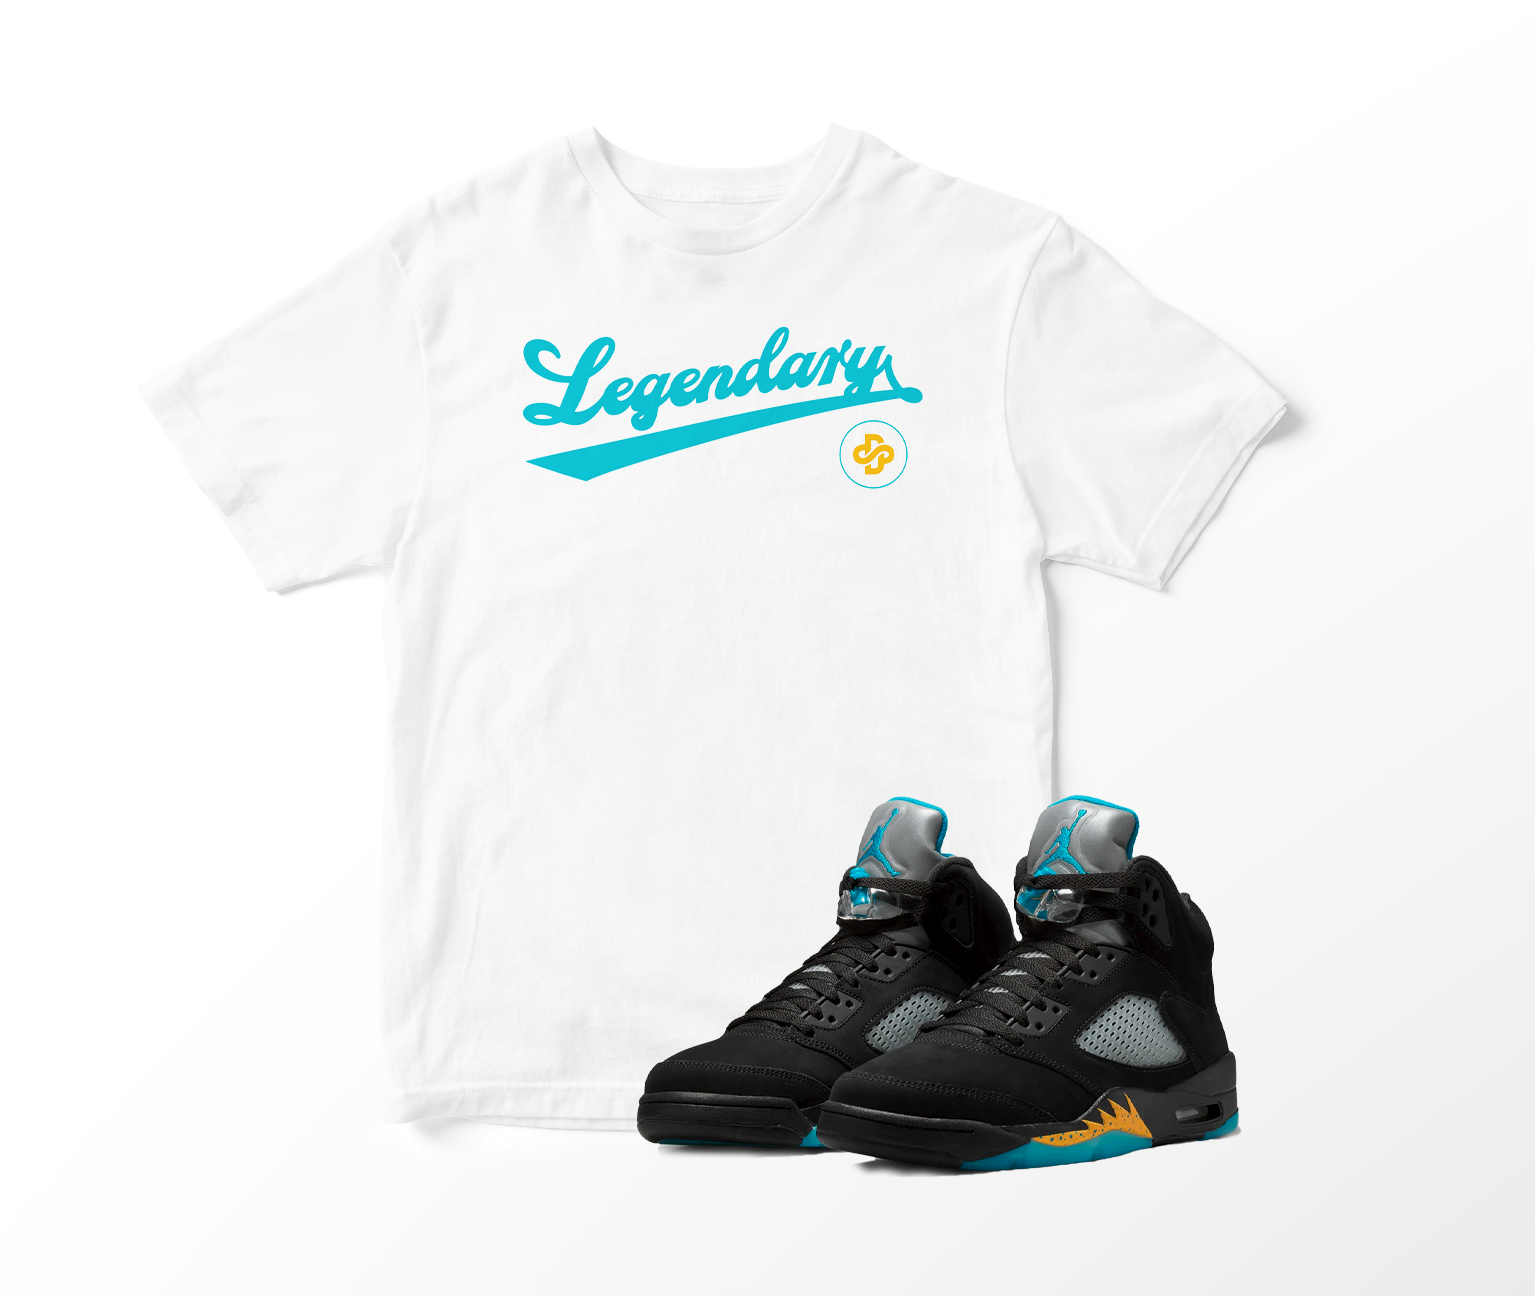 'Legendary' Custom Graphic Short Sleeve T-Shirt To Match Air Jordan 5 Aqua